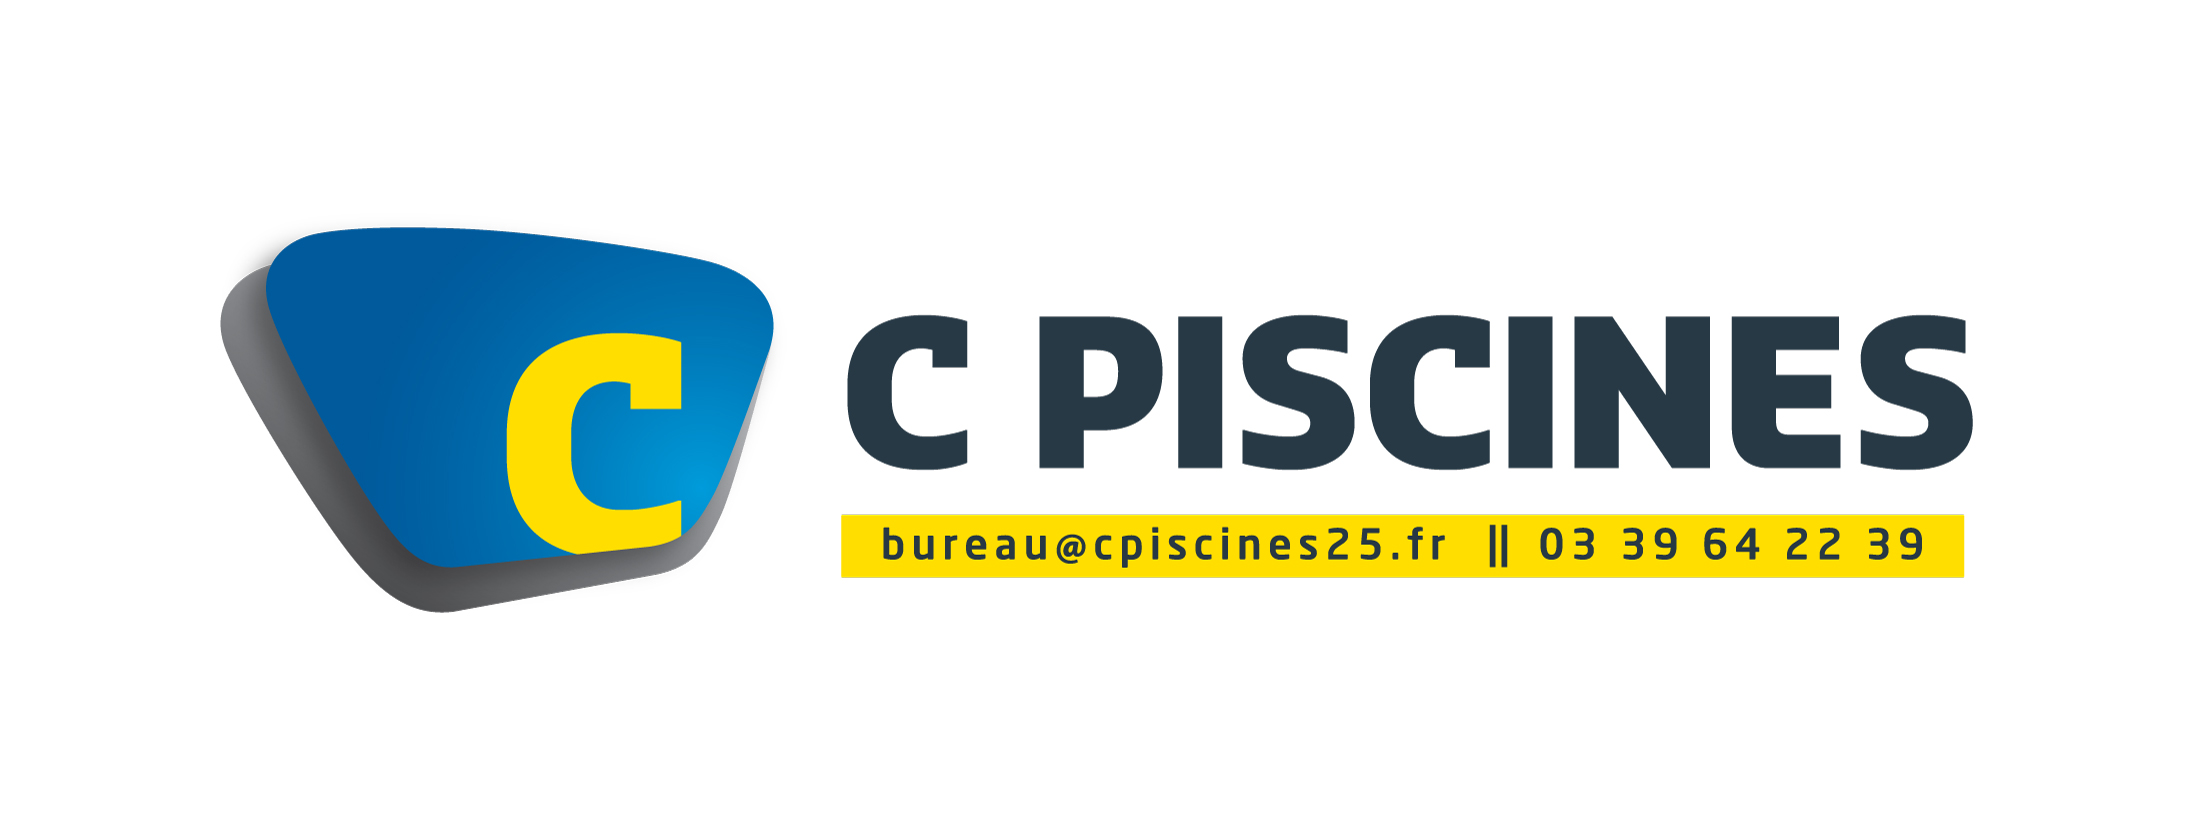 C-PISCINES_logo_horizontal-003.jpg